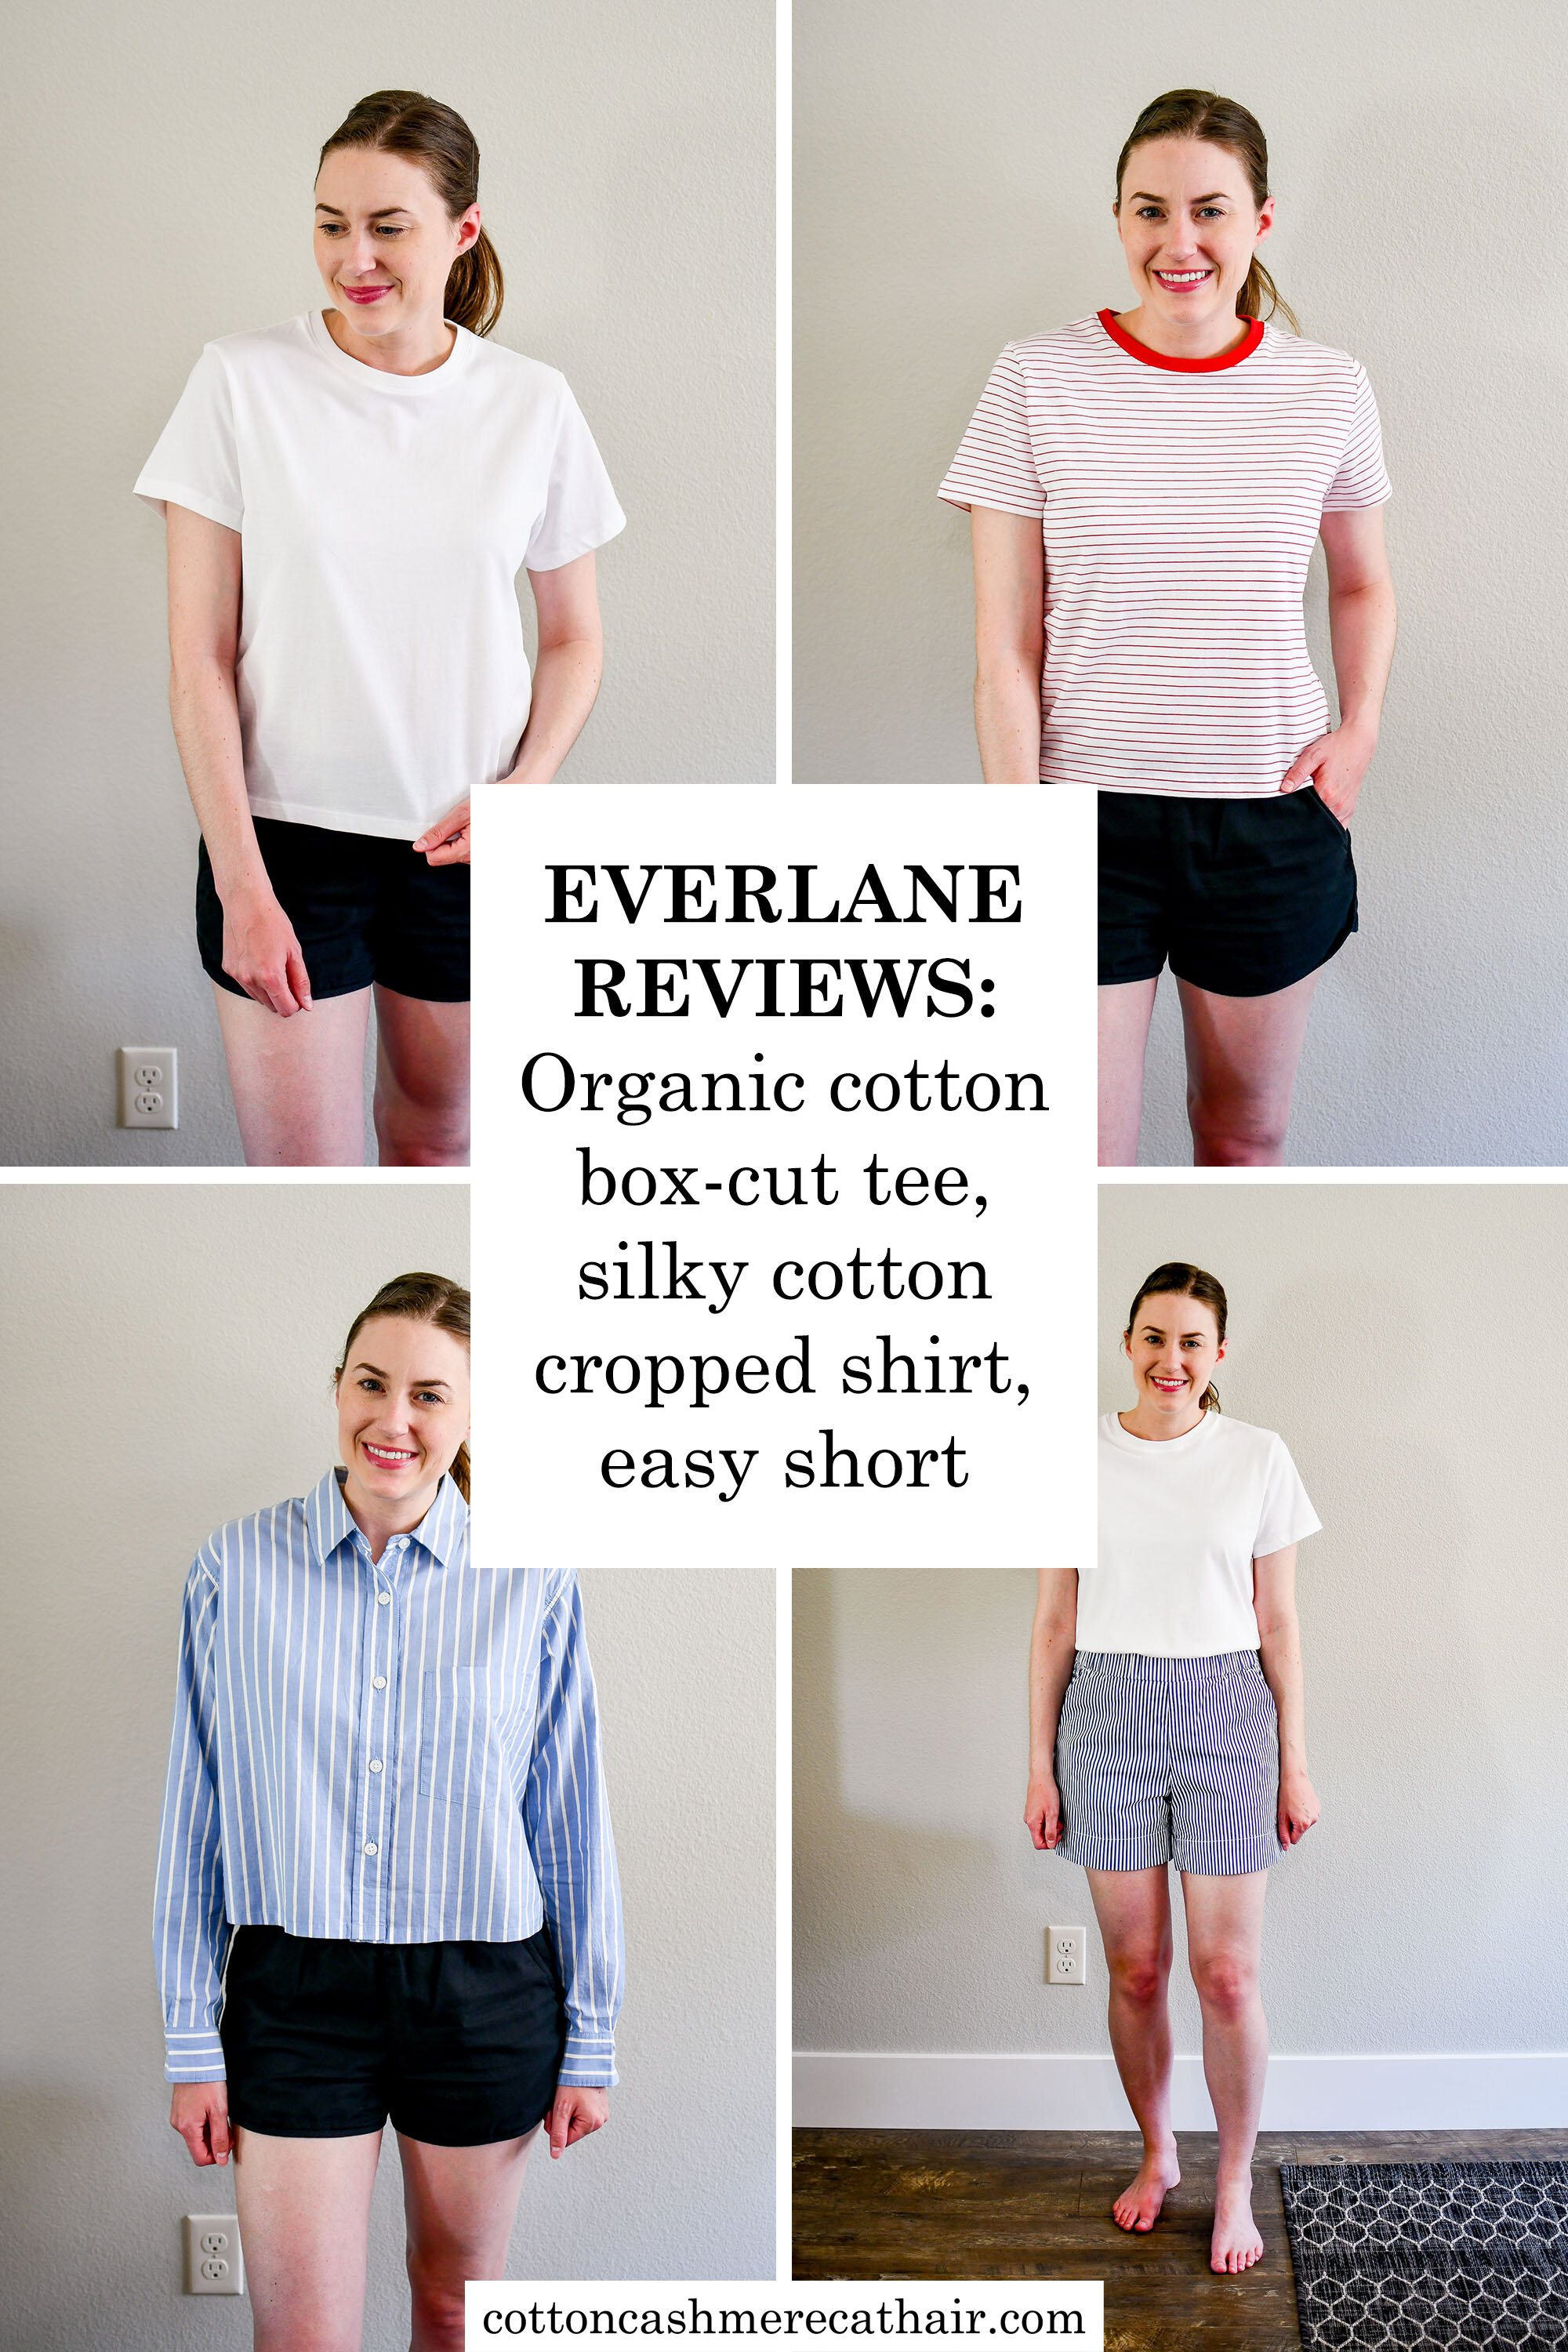 Everlane reviews: Organic cotton box-cut tee, silky cotton cropped shirt, easy short